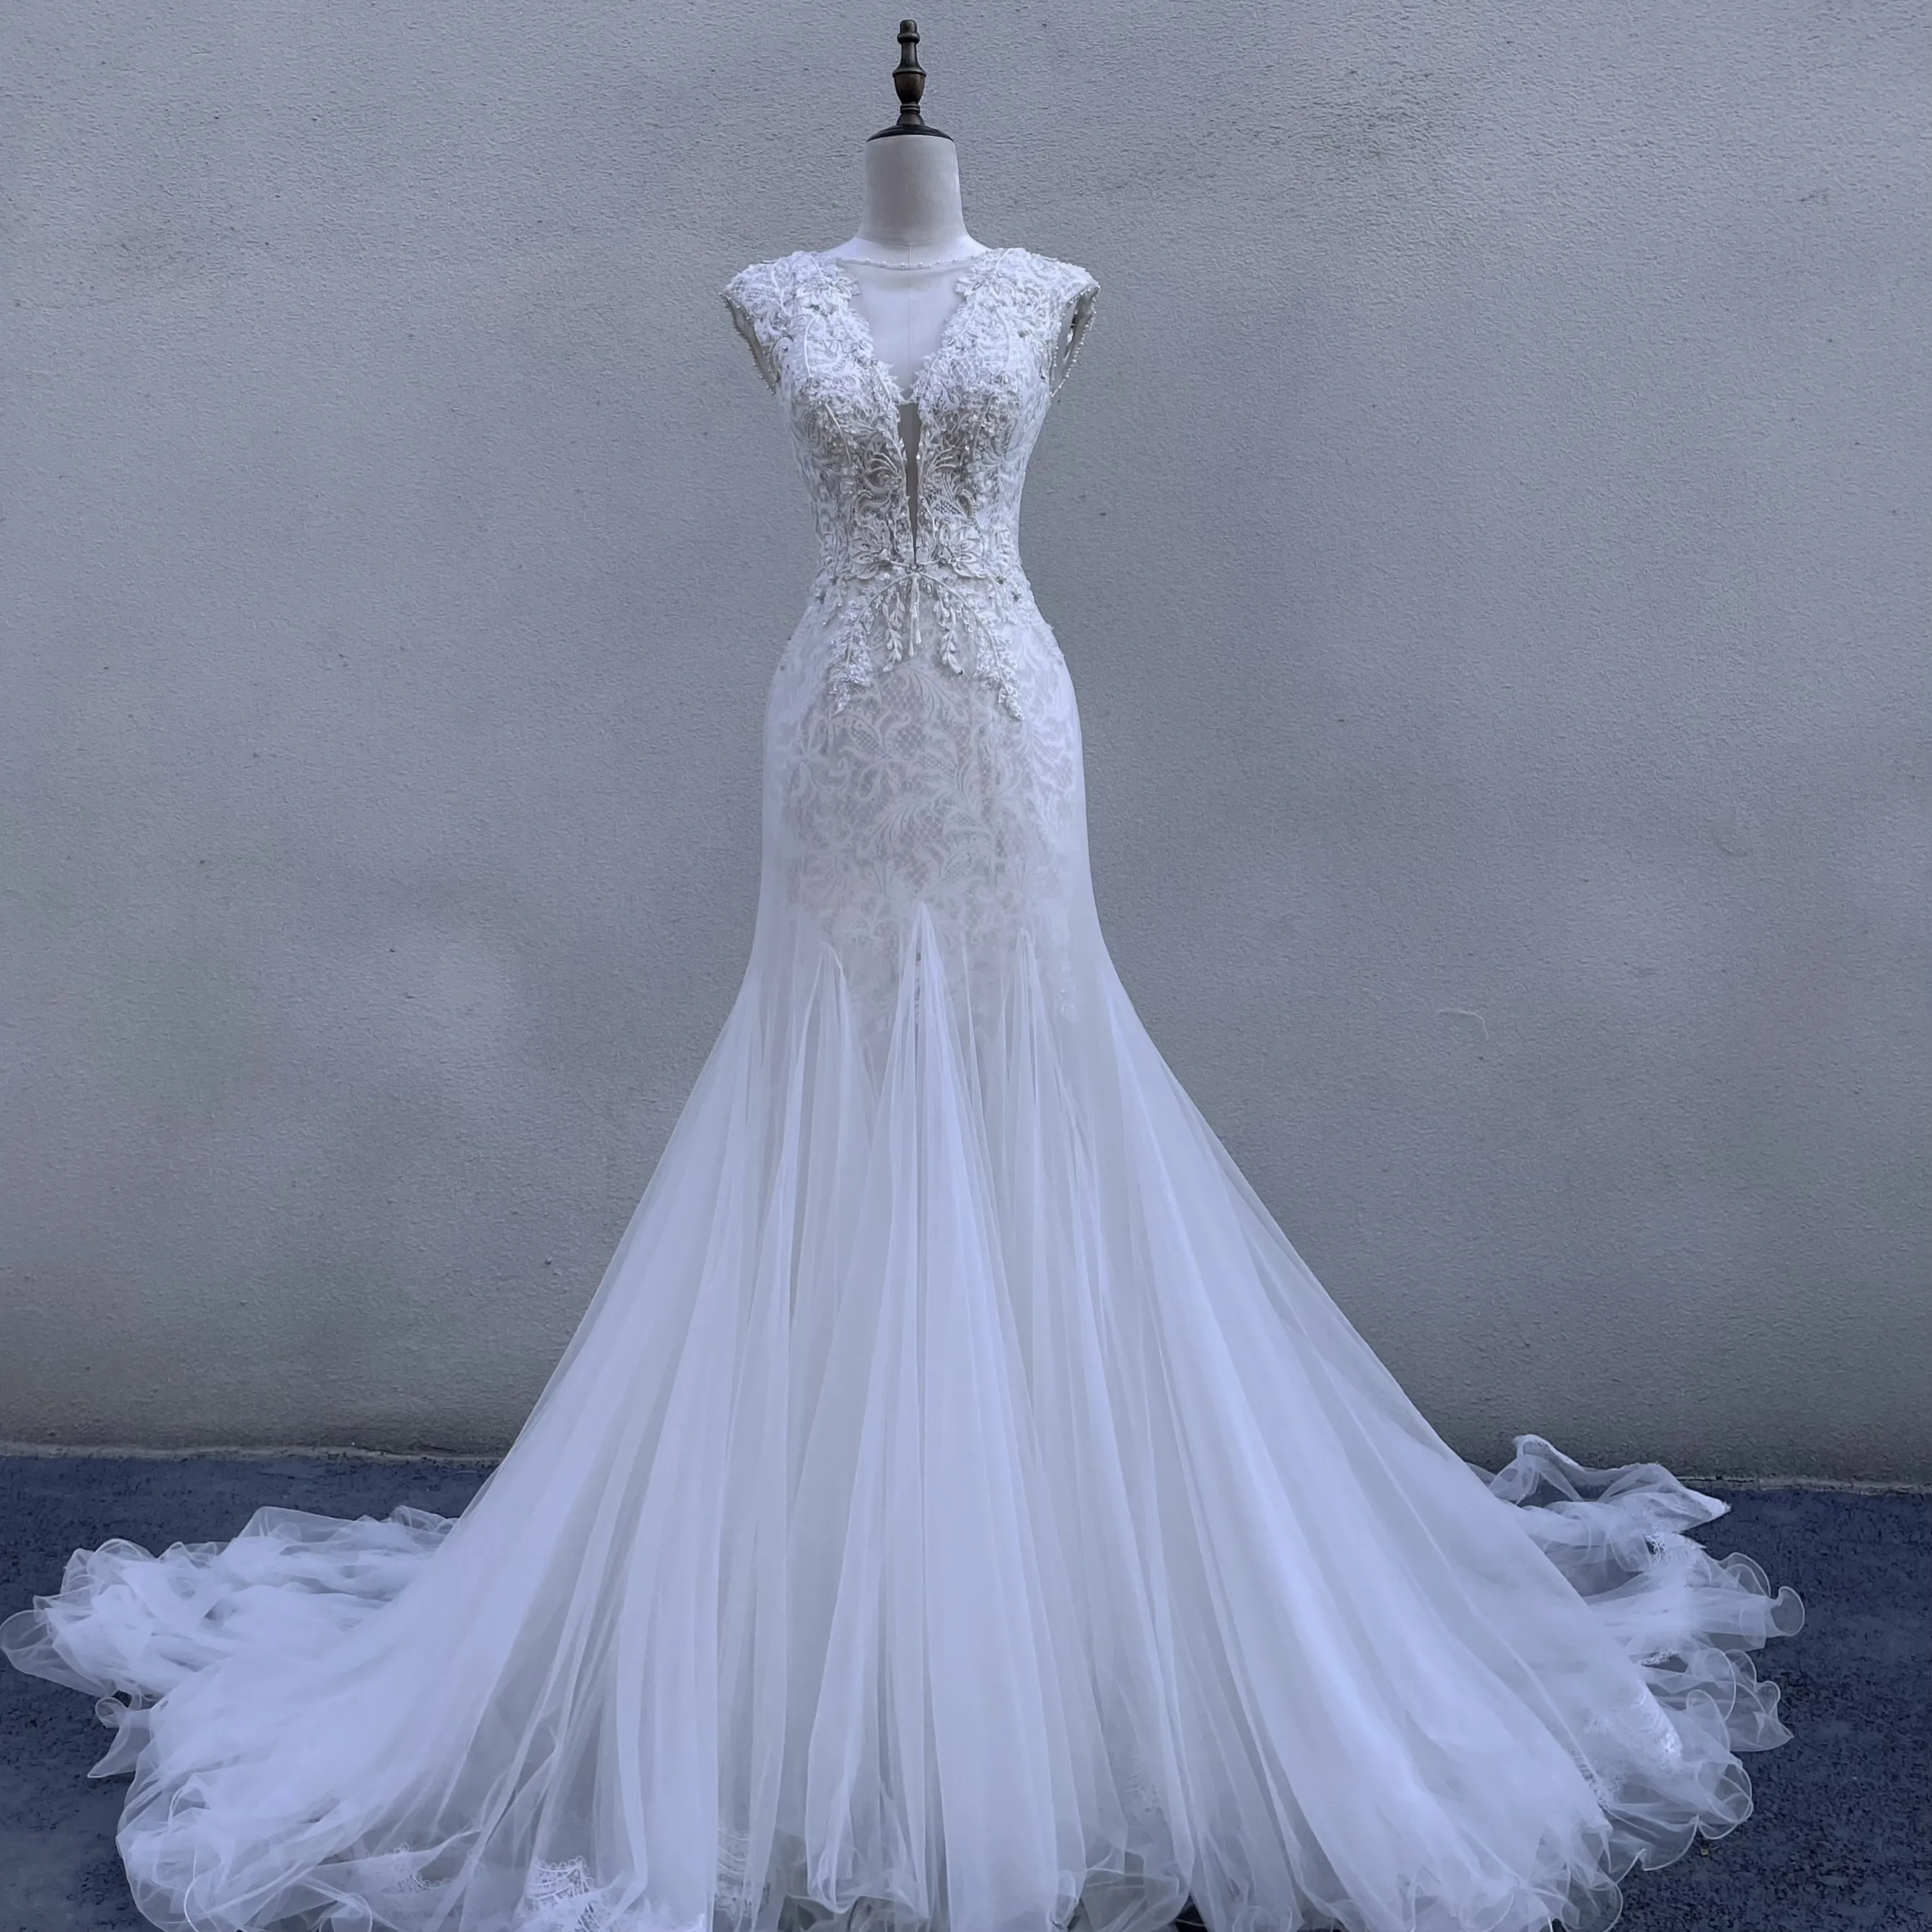 Luxury Prom Dress Bridal Wedding Ladies Lace Backless White V Neck Flared Dress Fashion Classic Mermaid Wedding Dress